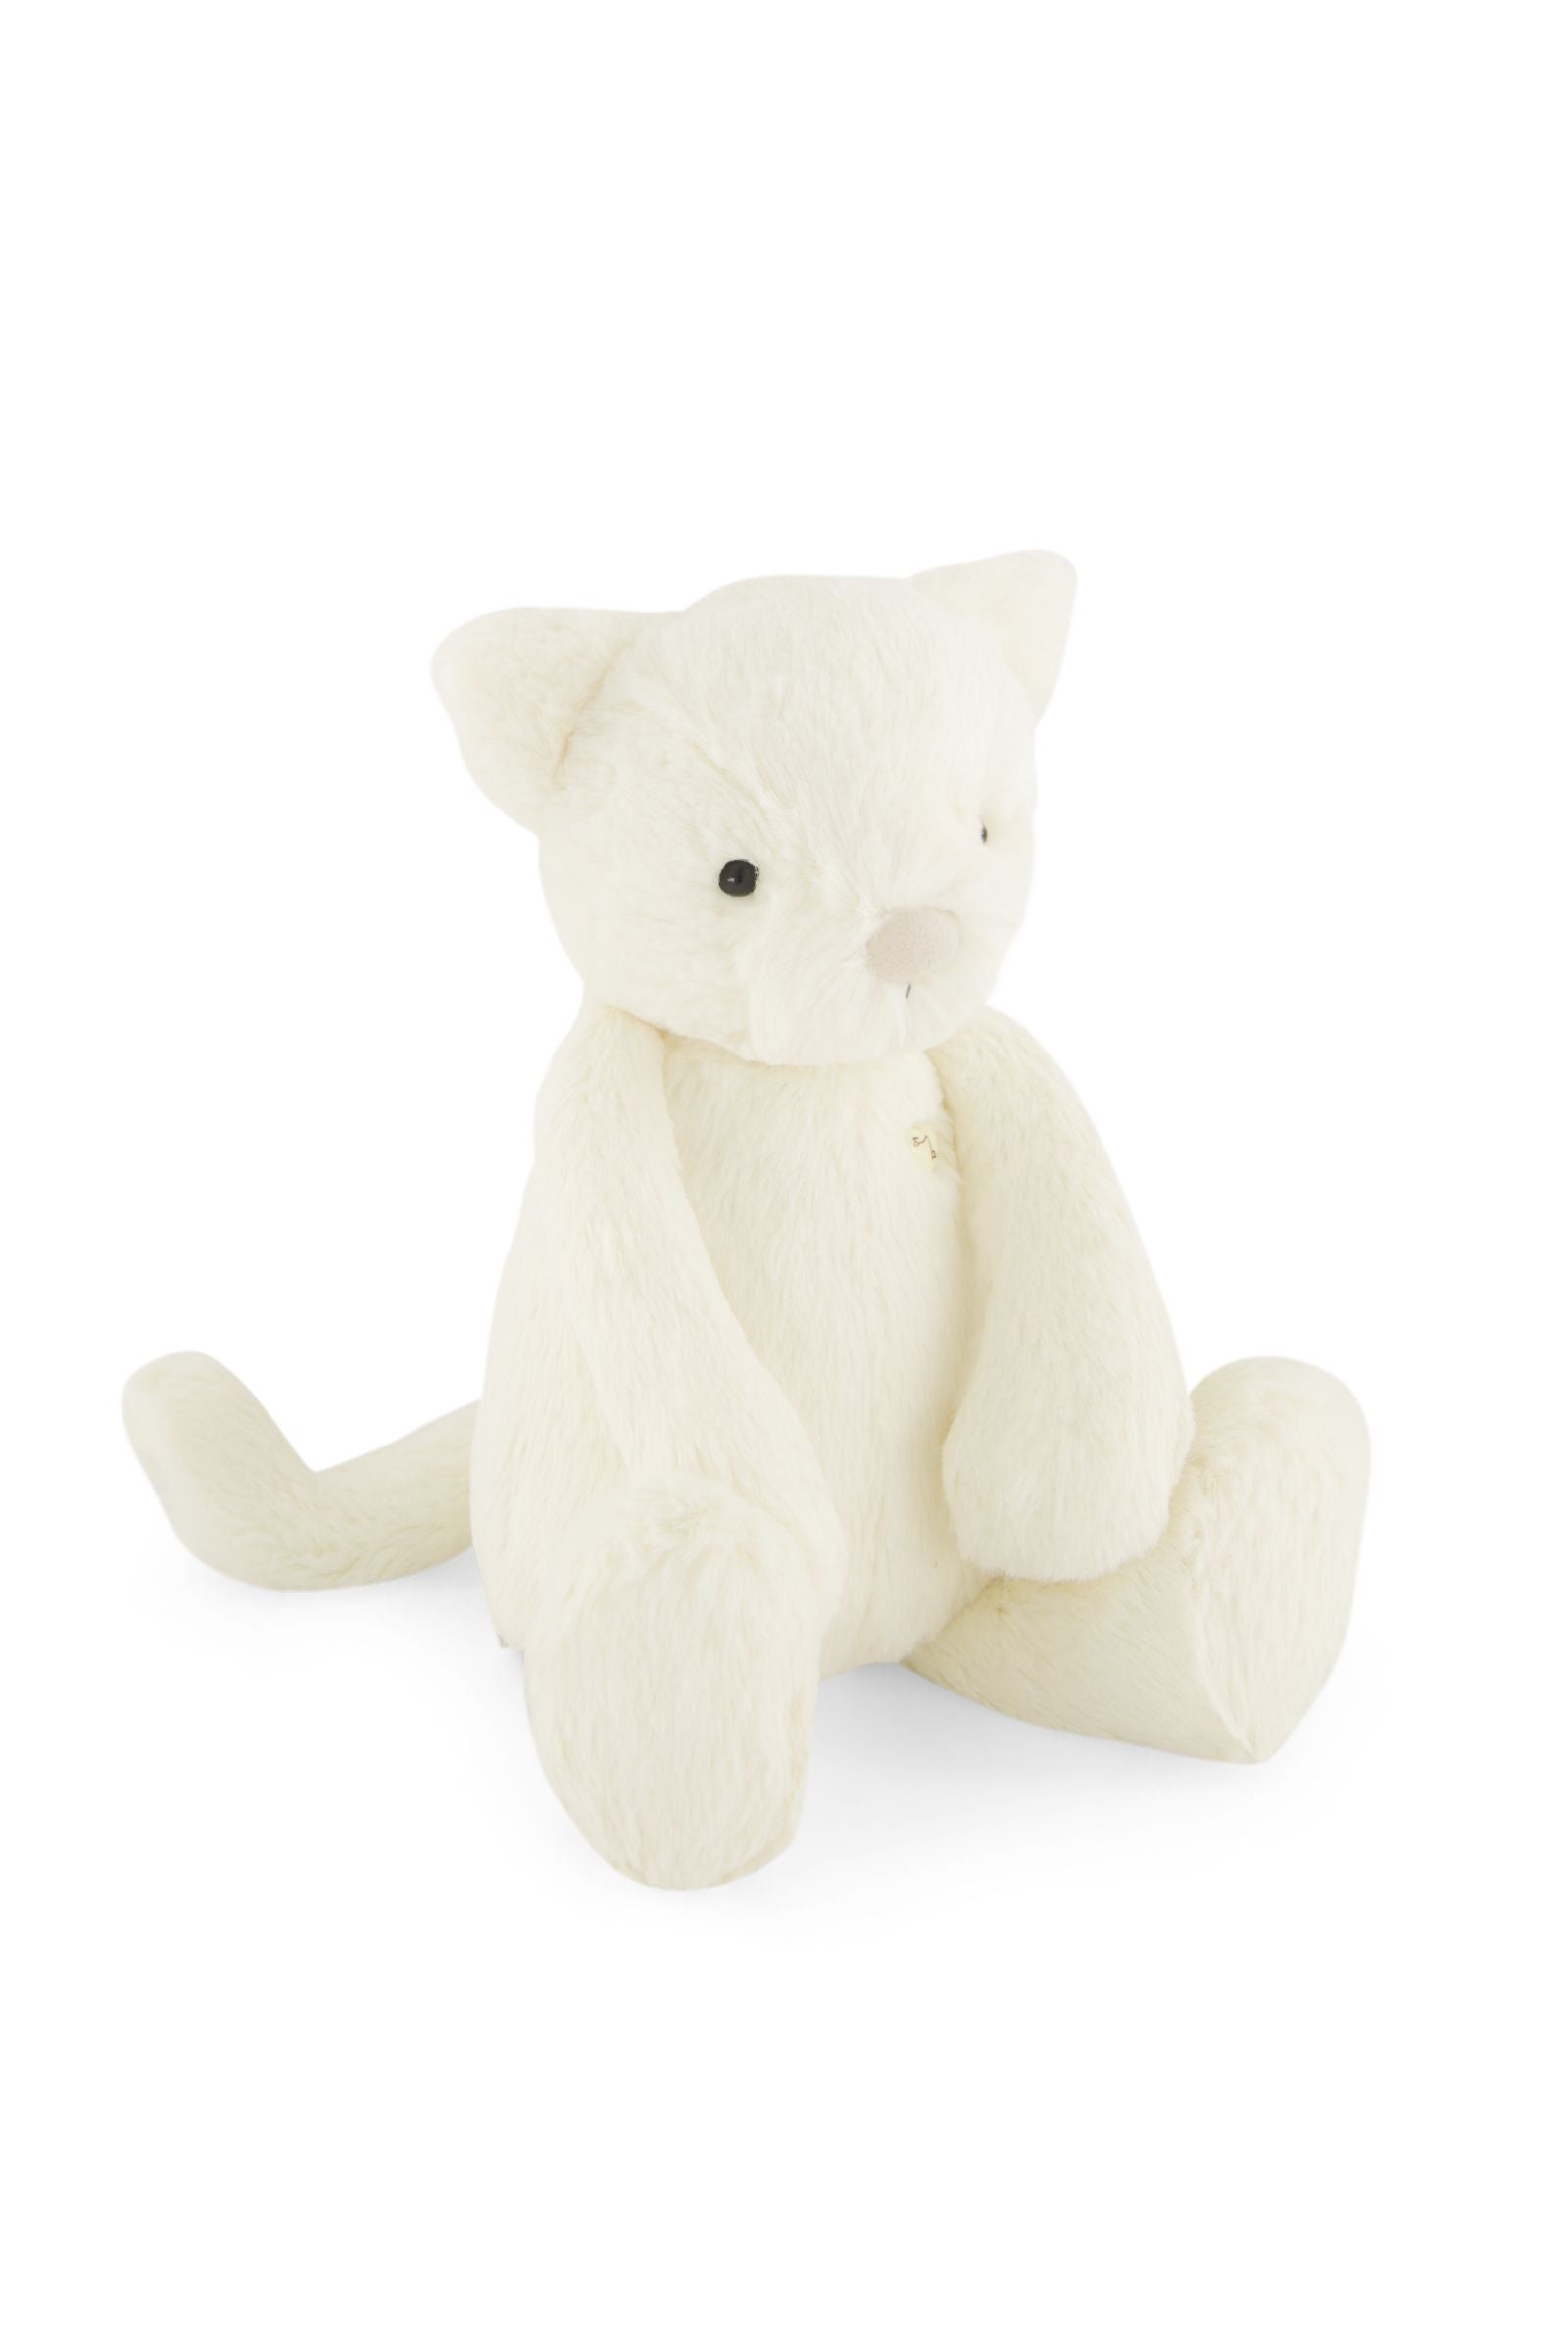 Snuggle Bunnies - Elsie the Kitty - Marshmallow 30cm-Toys-Jamie Kay-The Bay Room